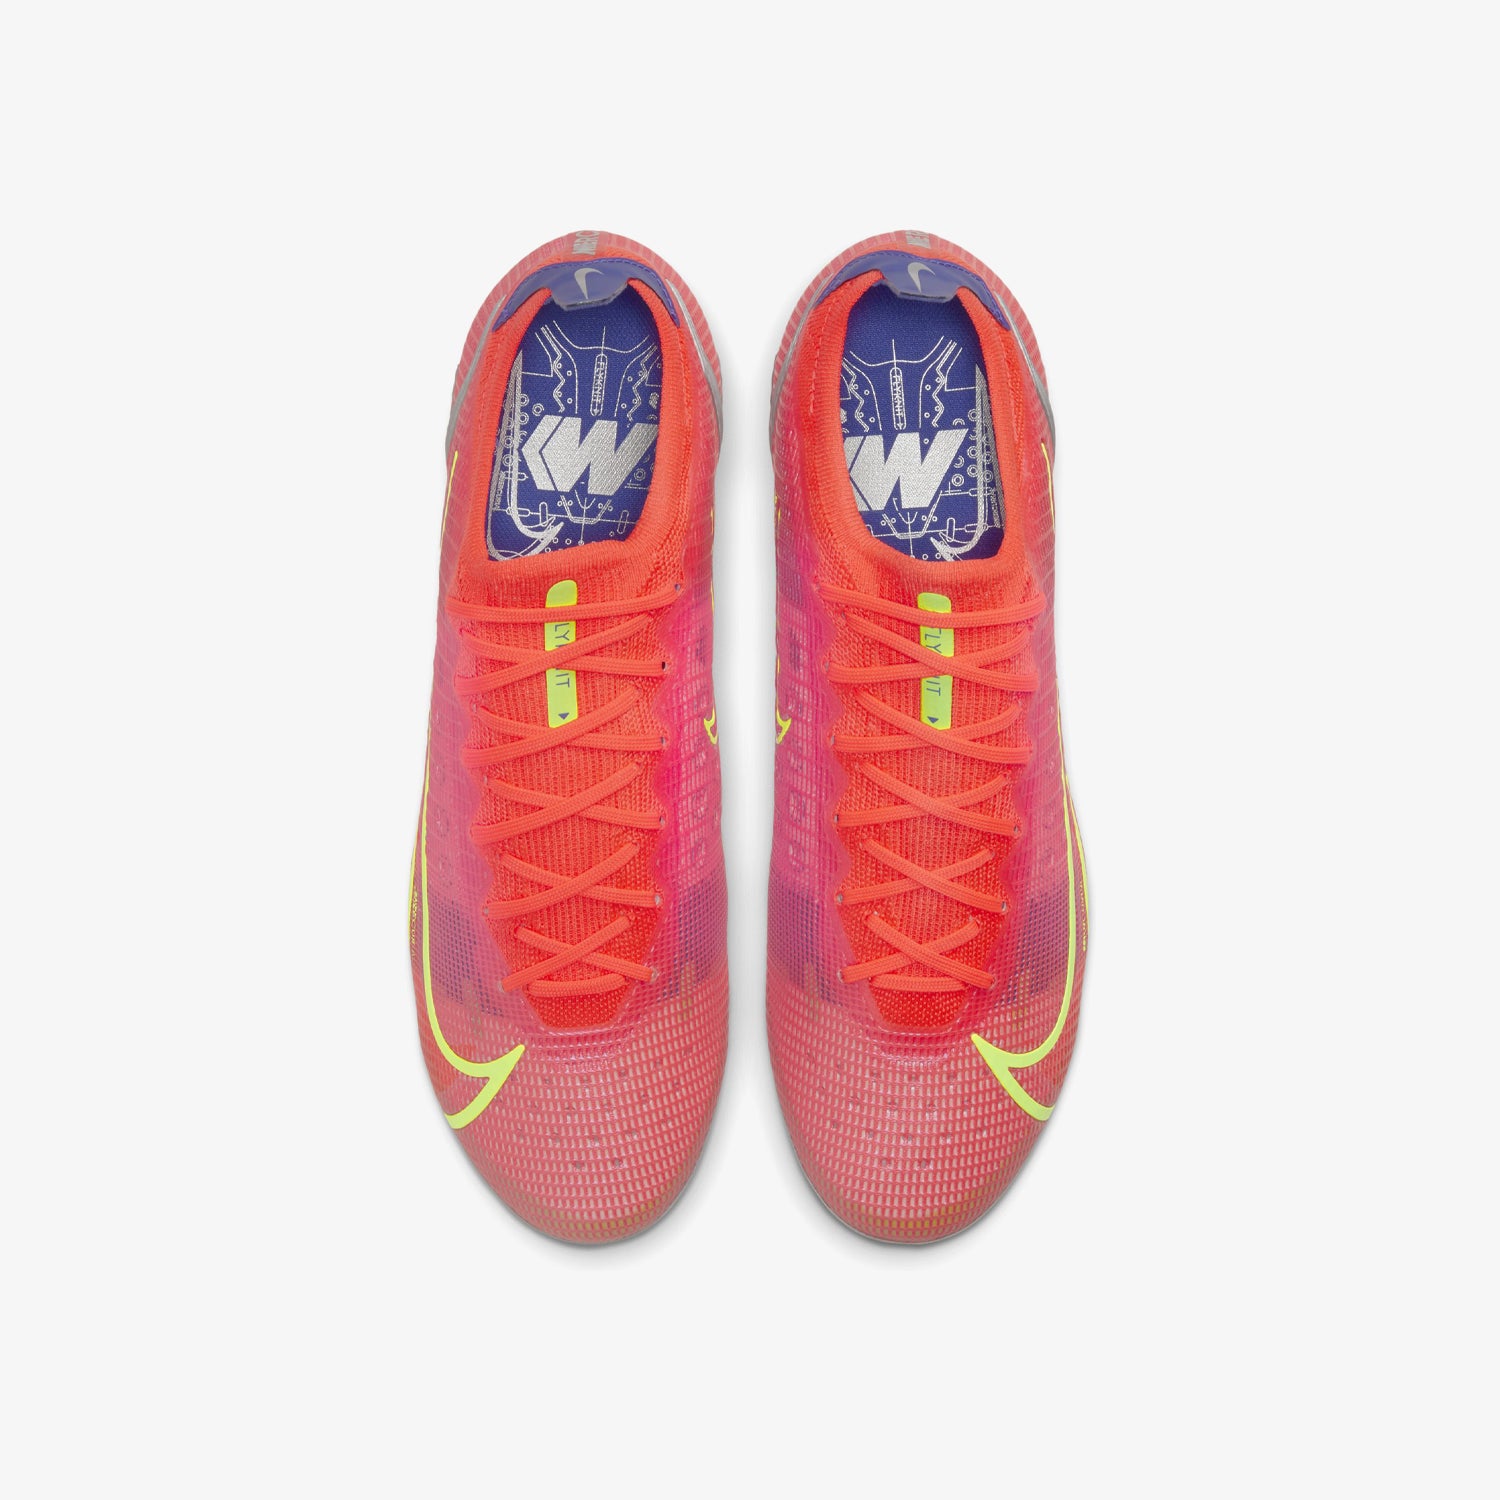 Nike Mercurial Vapor Elite Dragonfly Firm Ground Soccer Shoes